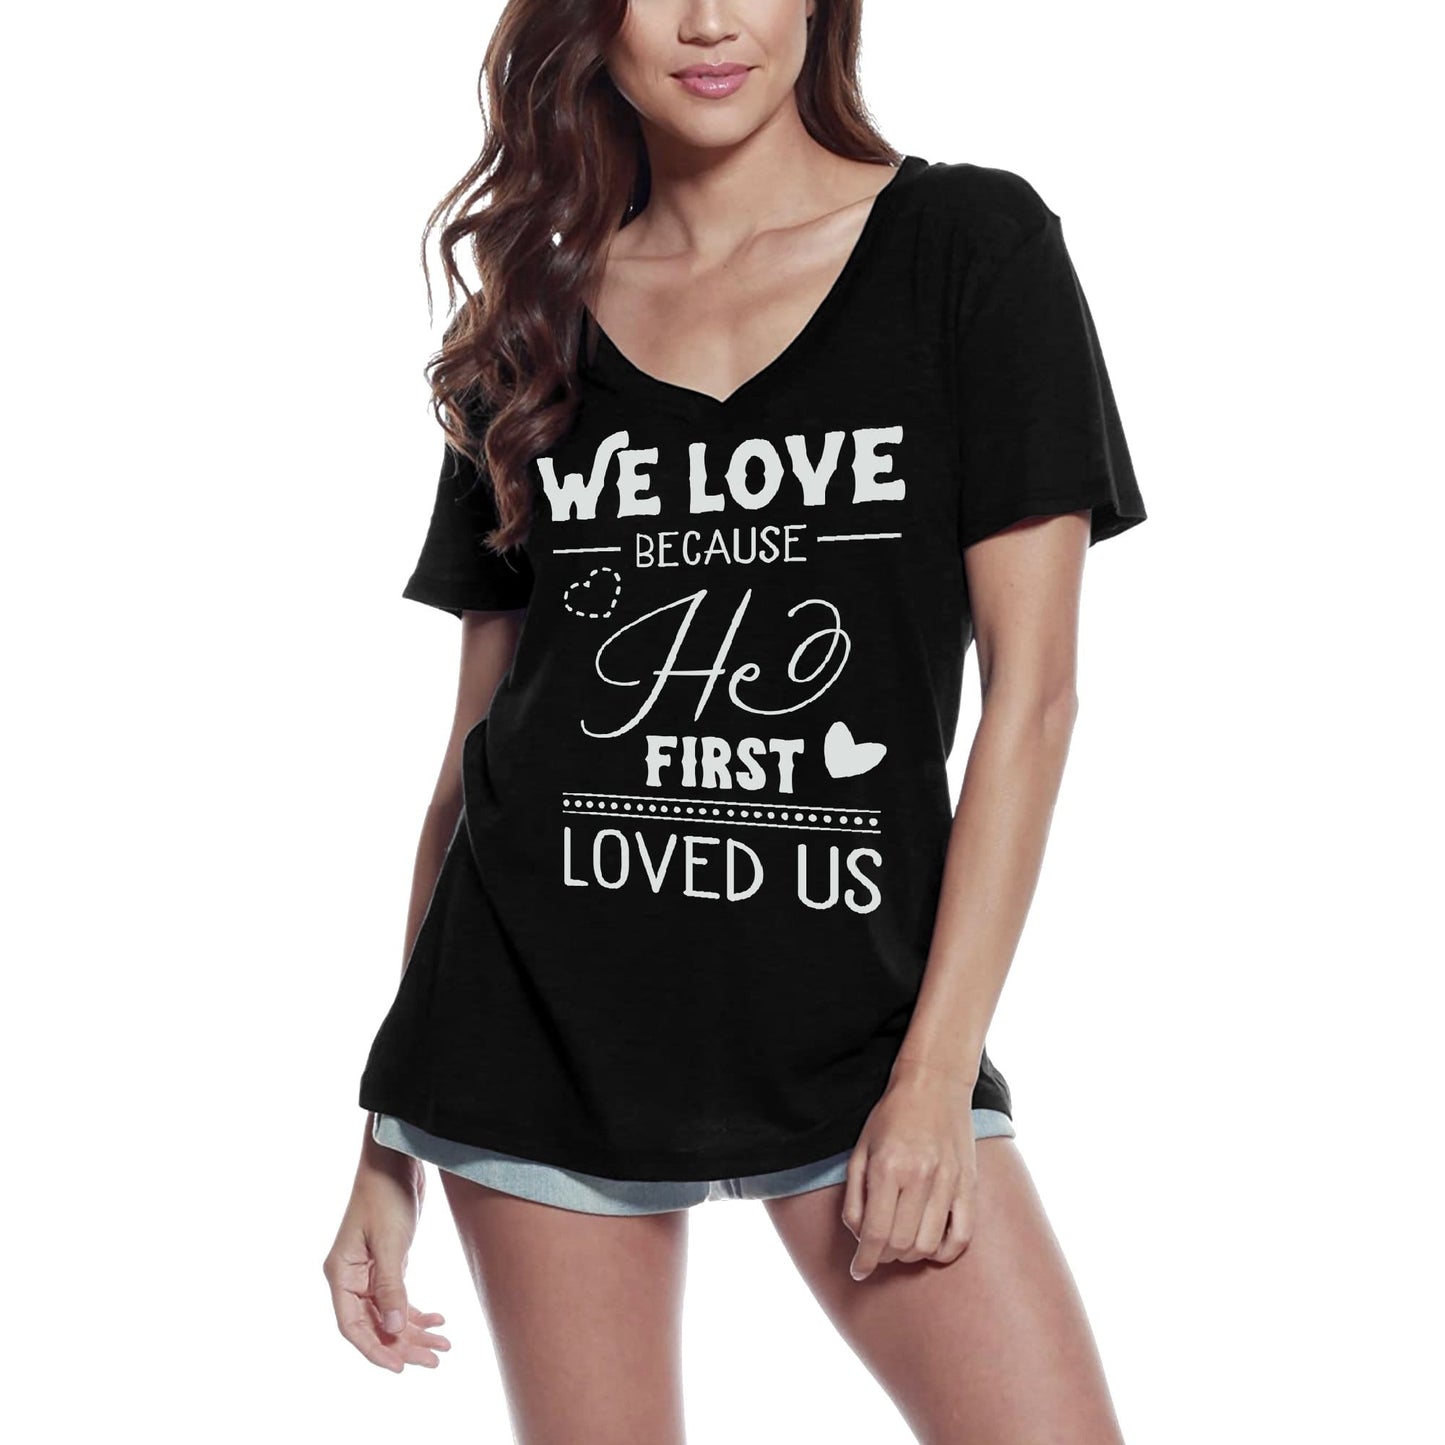 ULTRABASIC Women's T-Shirt We Love Because He First Loved Us - Short Sleeve Tee Shirt Tops